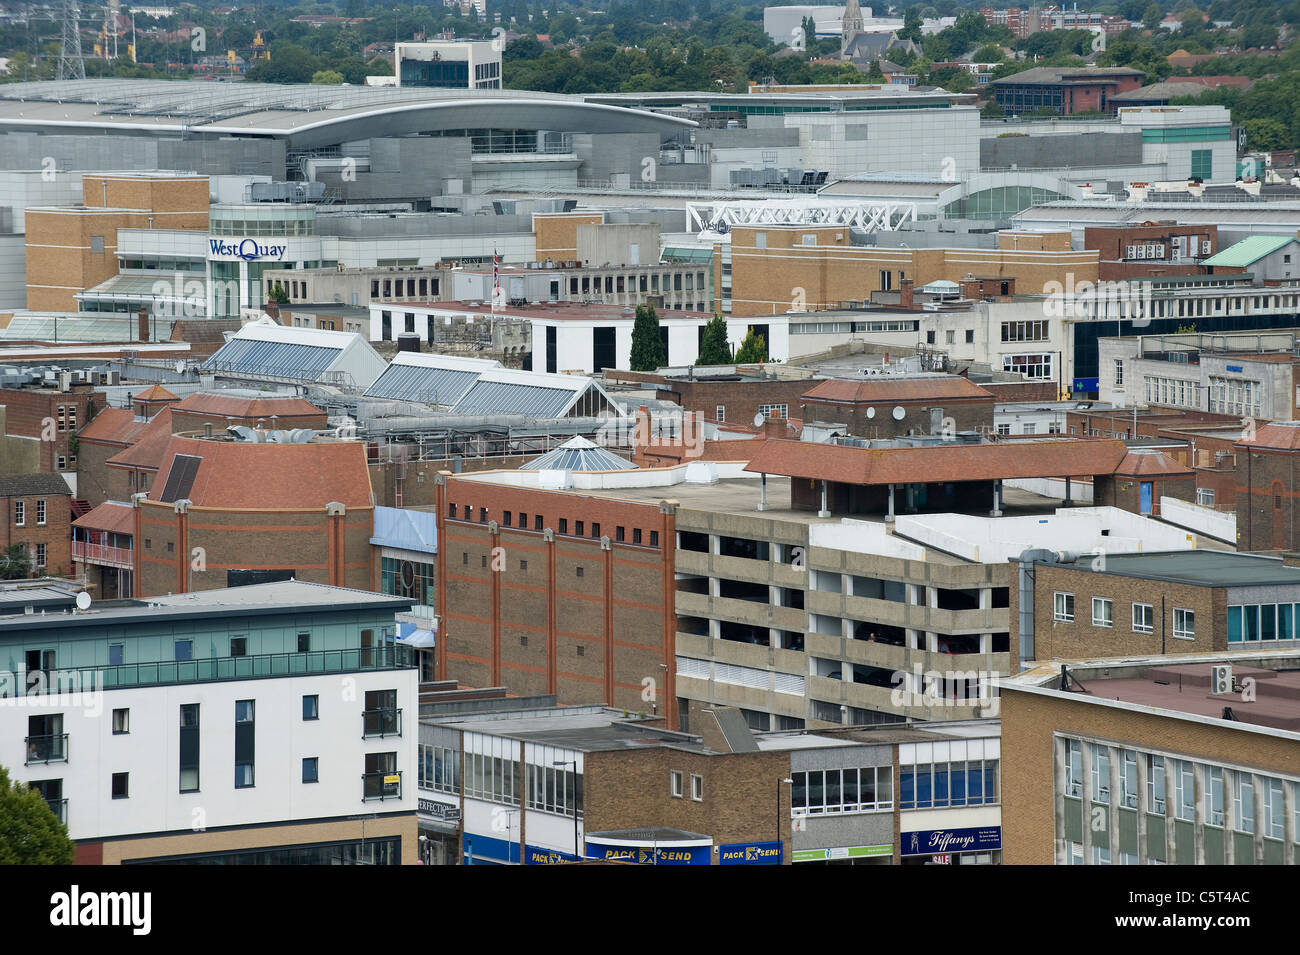 Southampton City centre, England - rooftop view Stock Photo